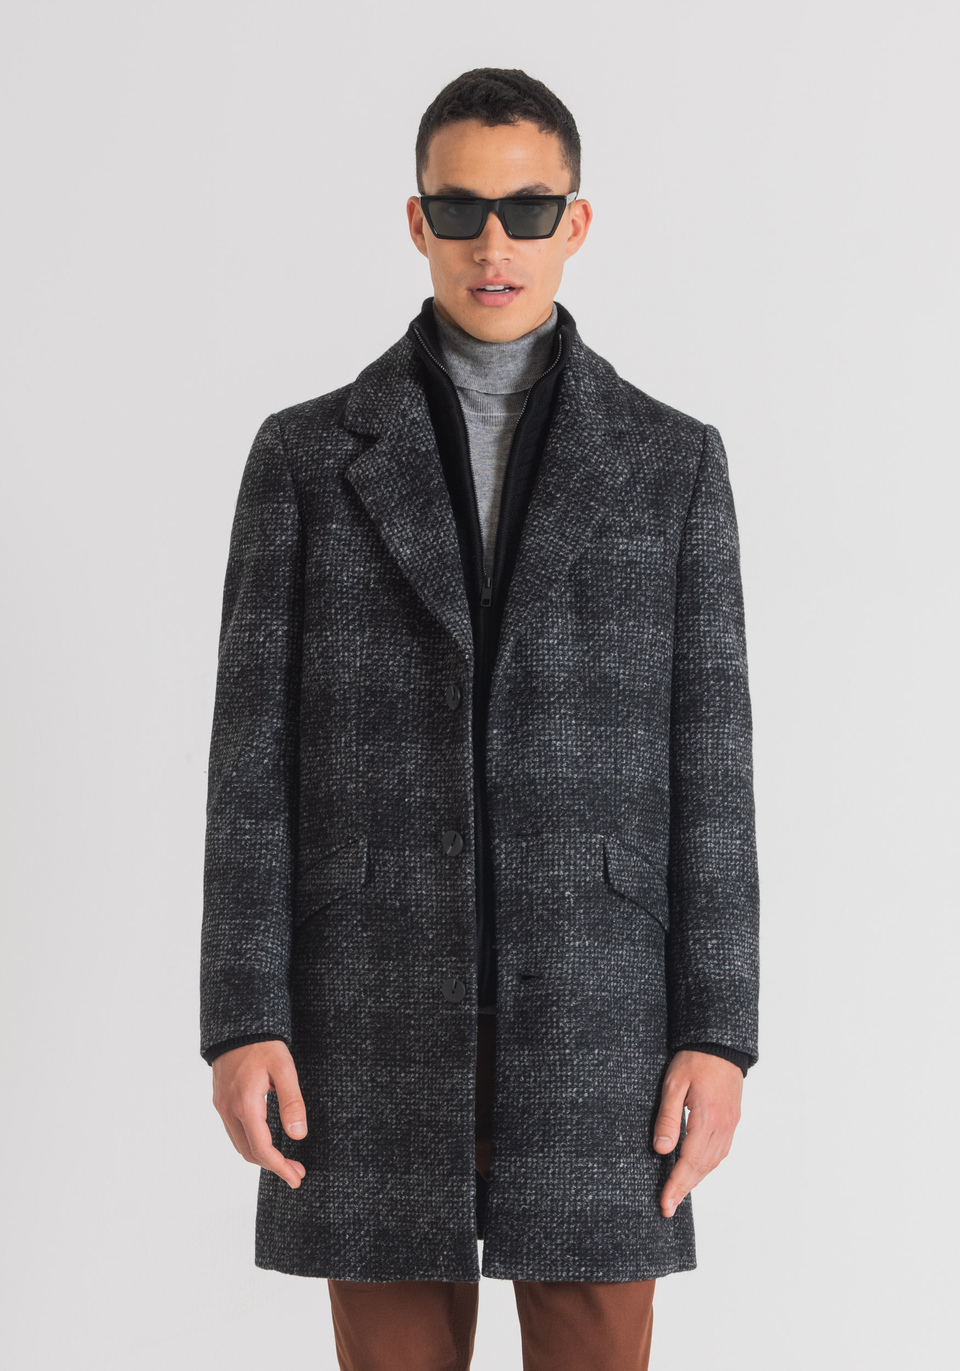 "RUSSEL" SLIM-FIT COAT IN WOOL BLEND - Antony Morato Online Shop